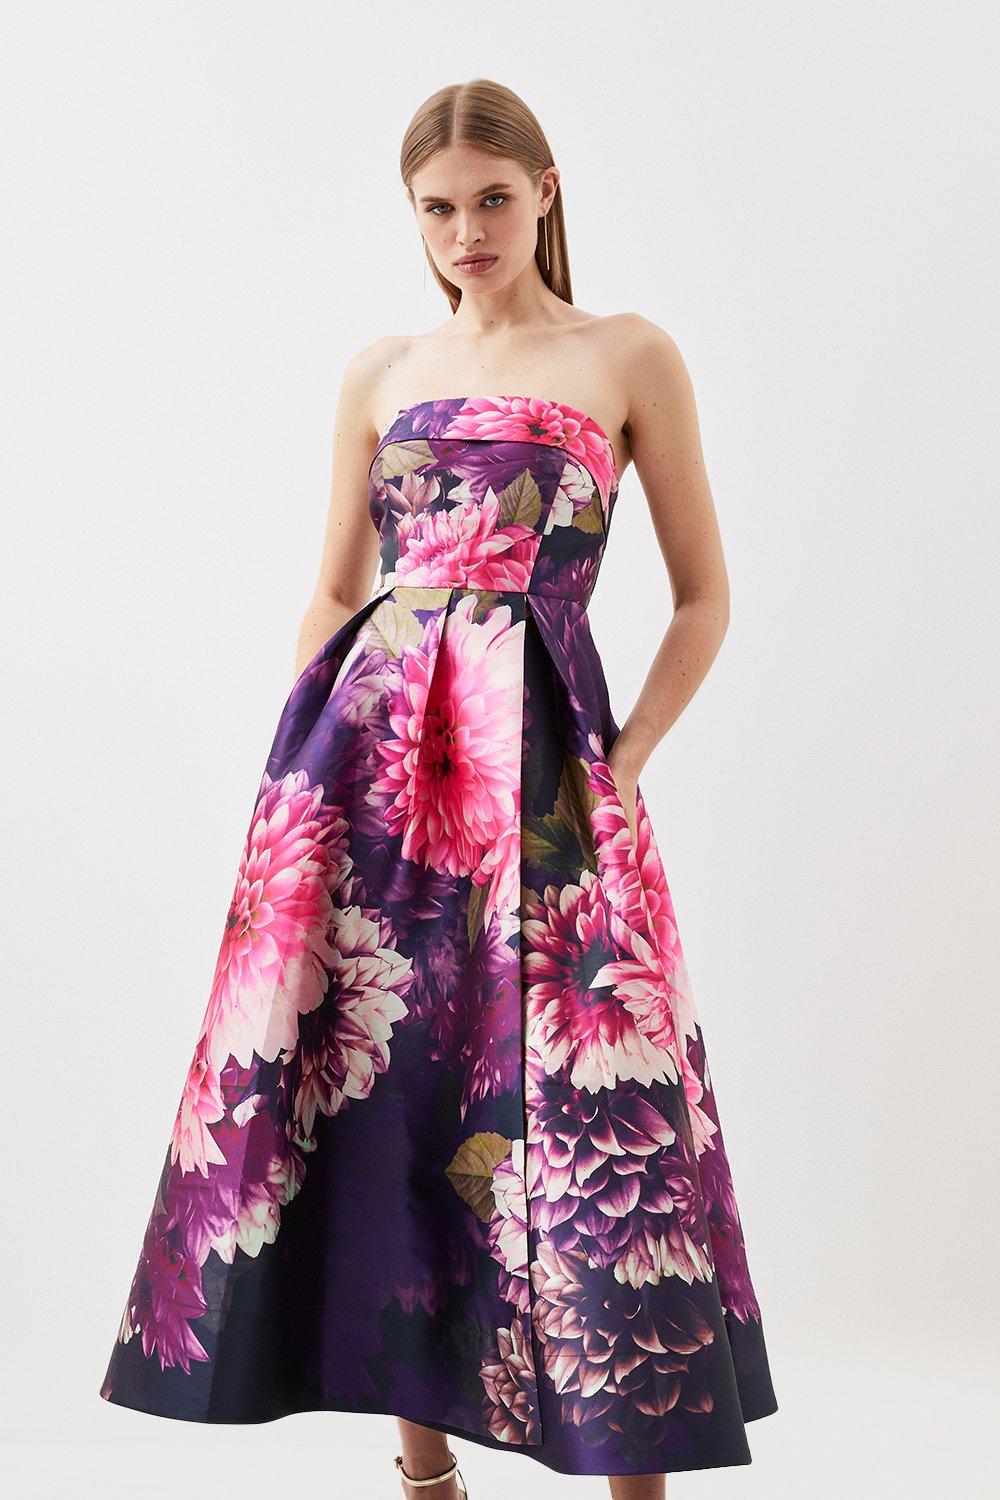 Exploding Floral Midaxi Millen | Dress Front Karen Prom Split